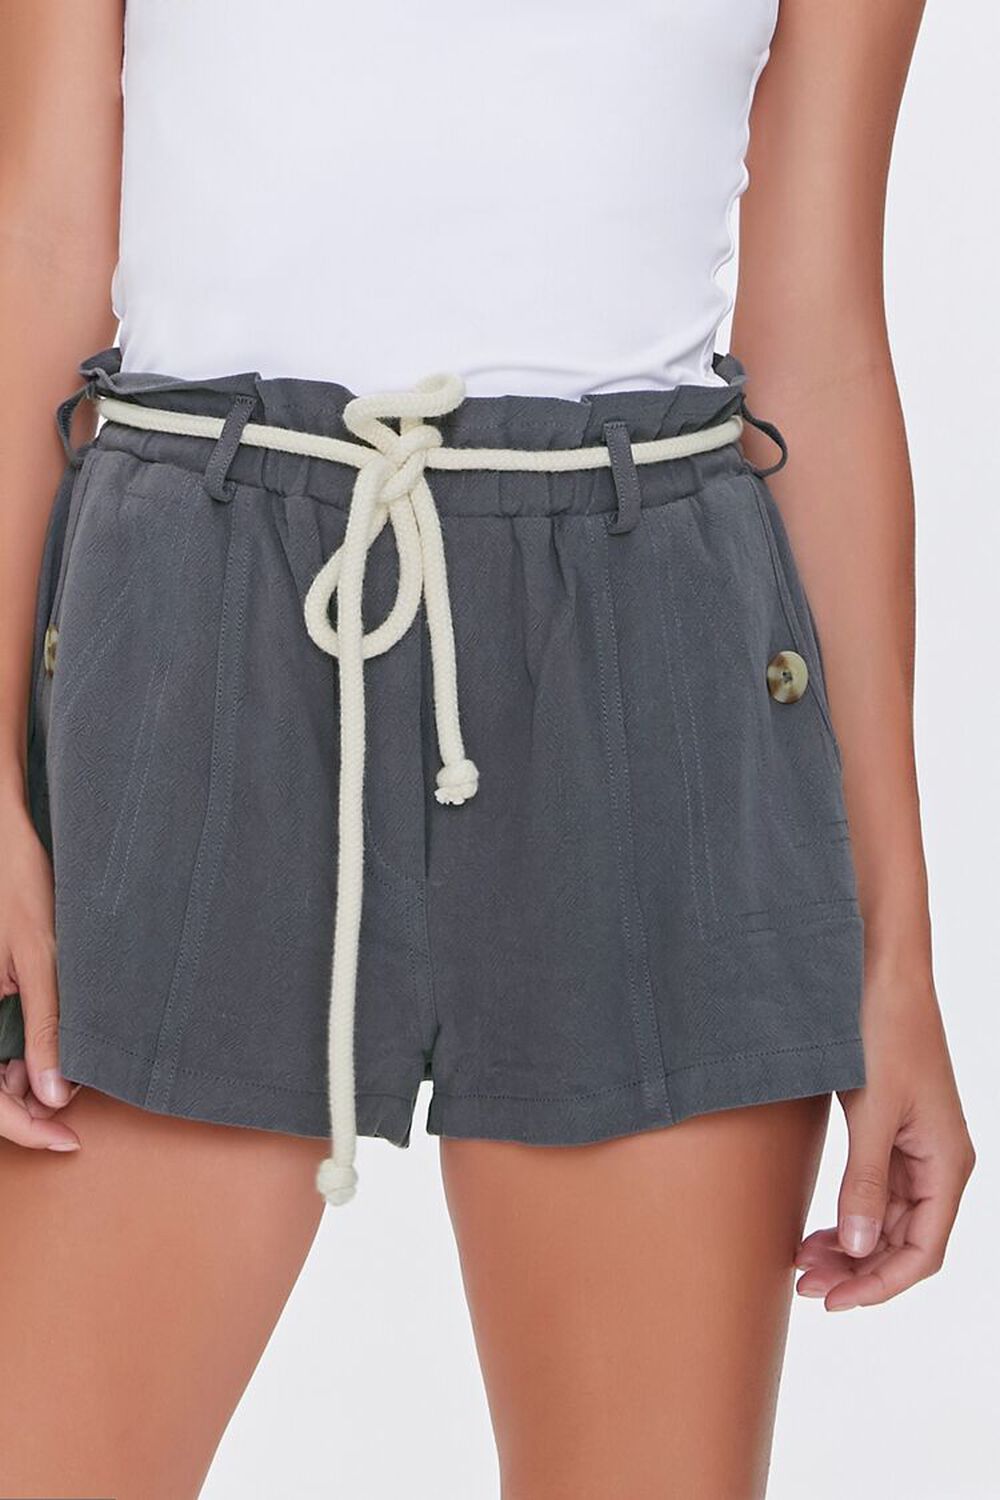 CHARCOAL Paperbag Rope-Belt Shorts, image 1